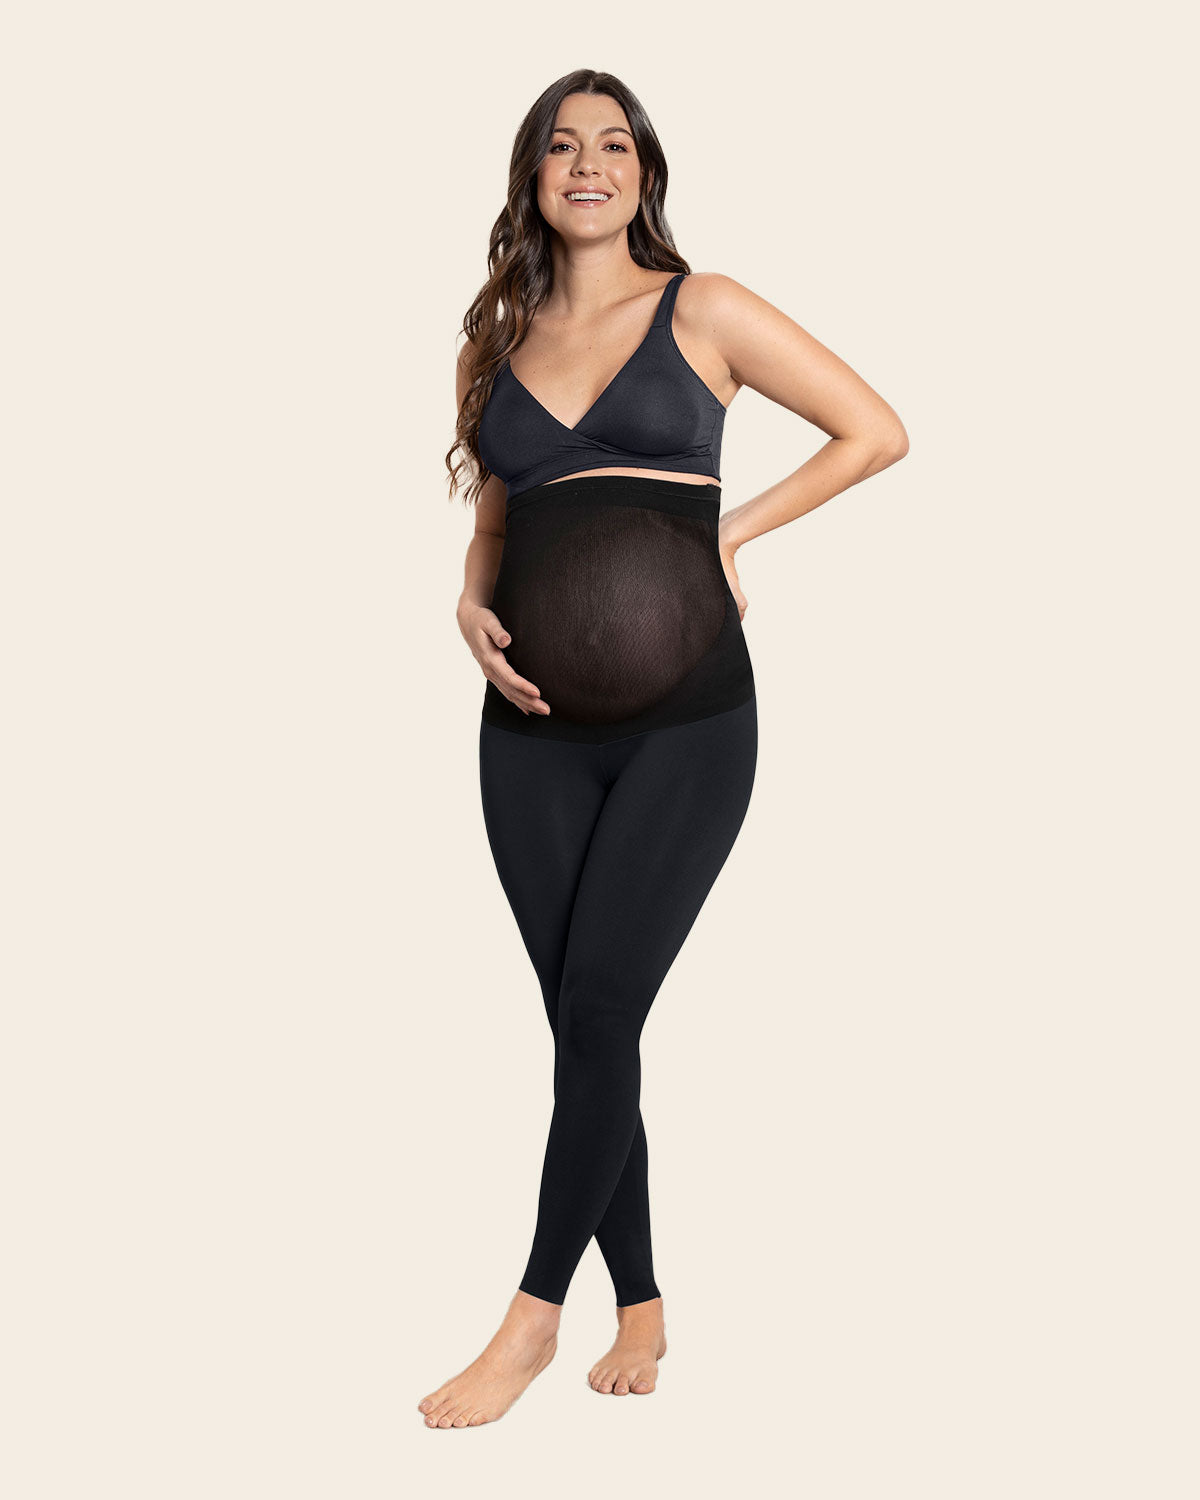 New! Maternity compression leggings for pregnancy - British